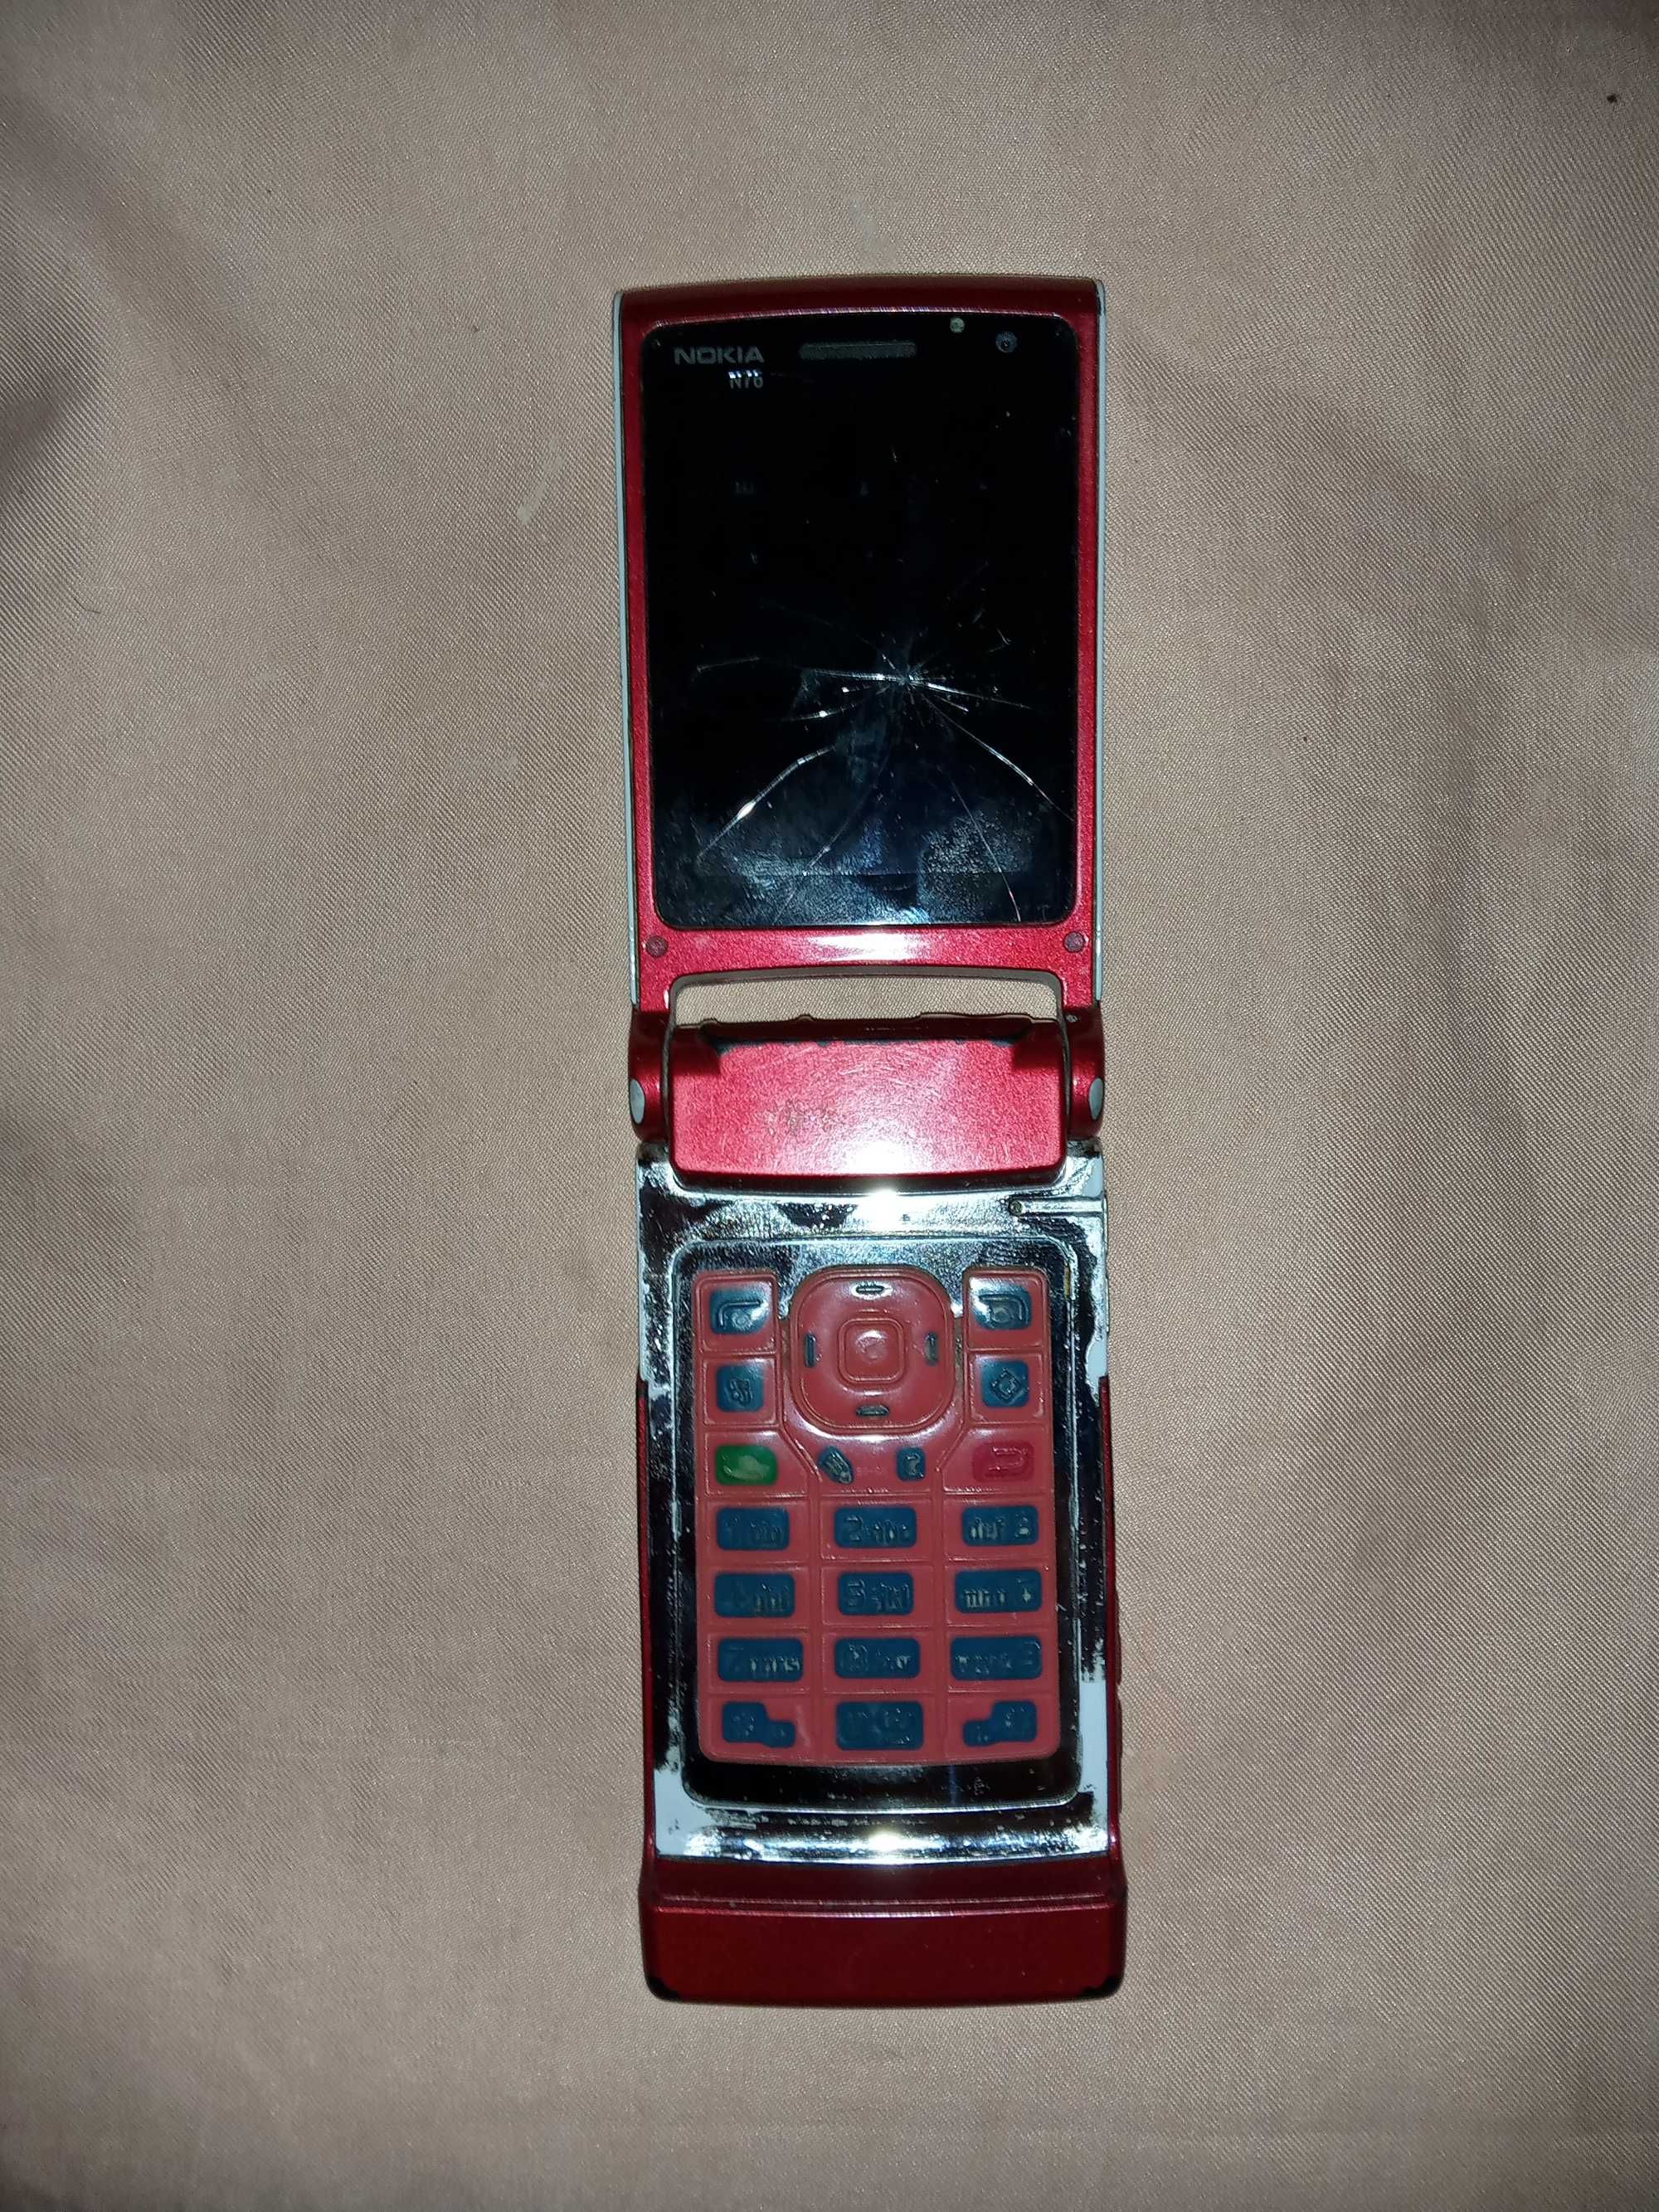 Нокия н76 телефон раскладушка Nokia N76